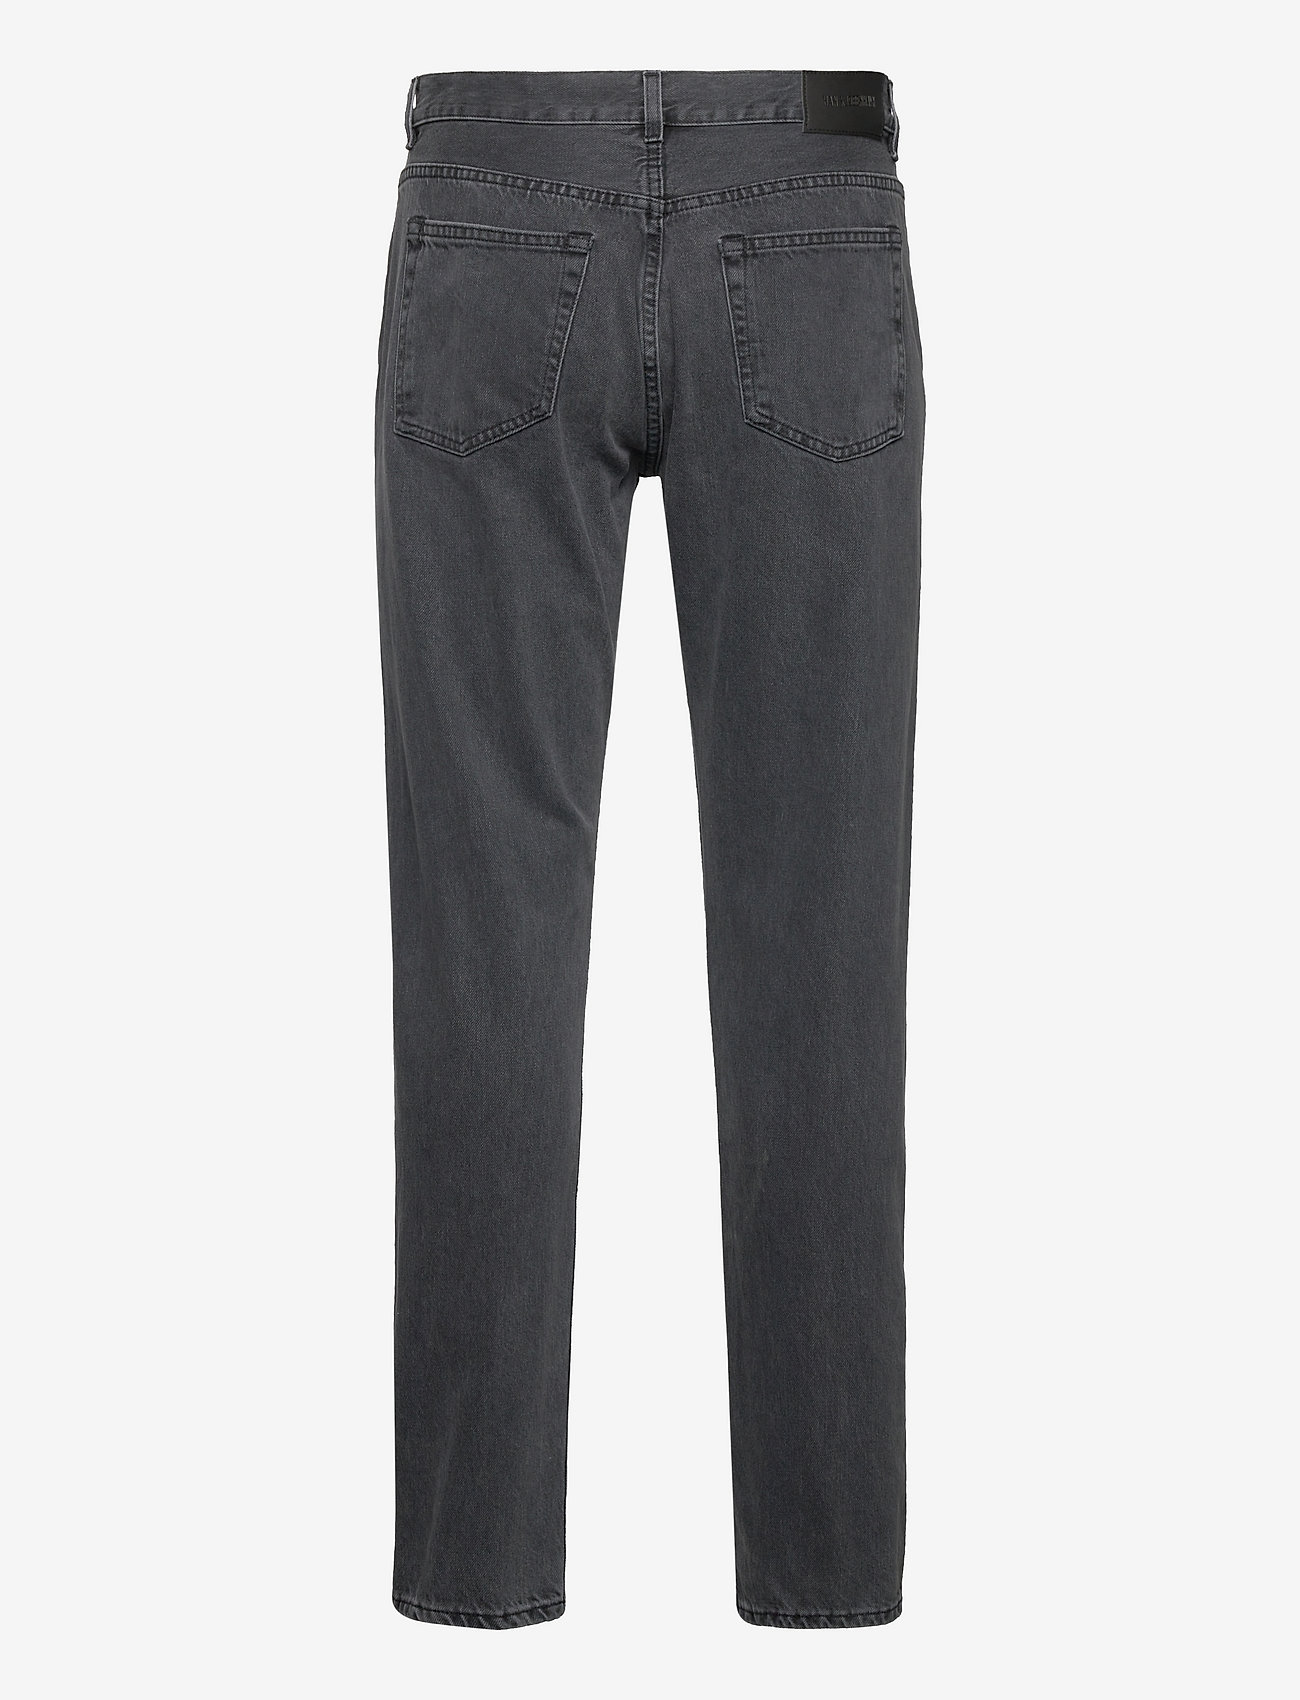 HAN Kjøbenhavn - Tapered Jeans - tapered jeans - black stone - 1